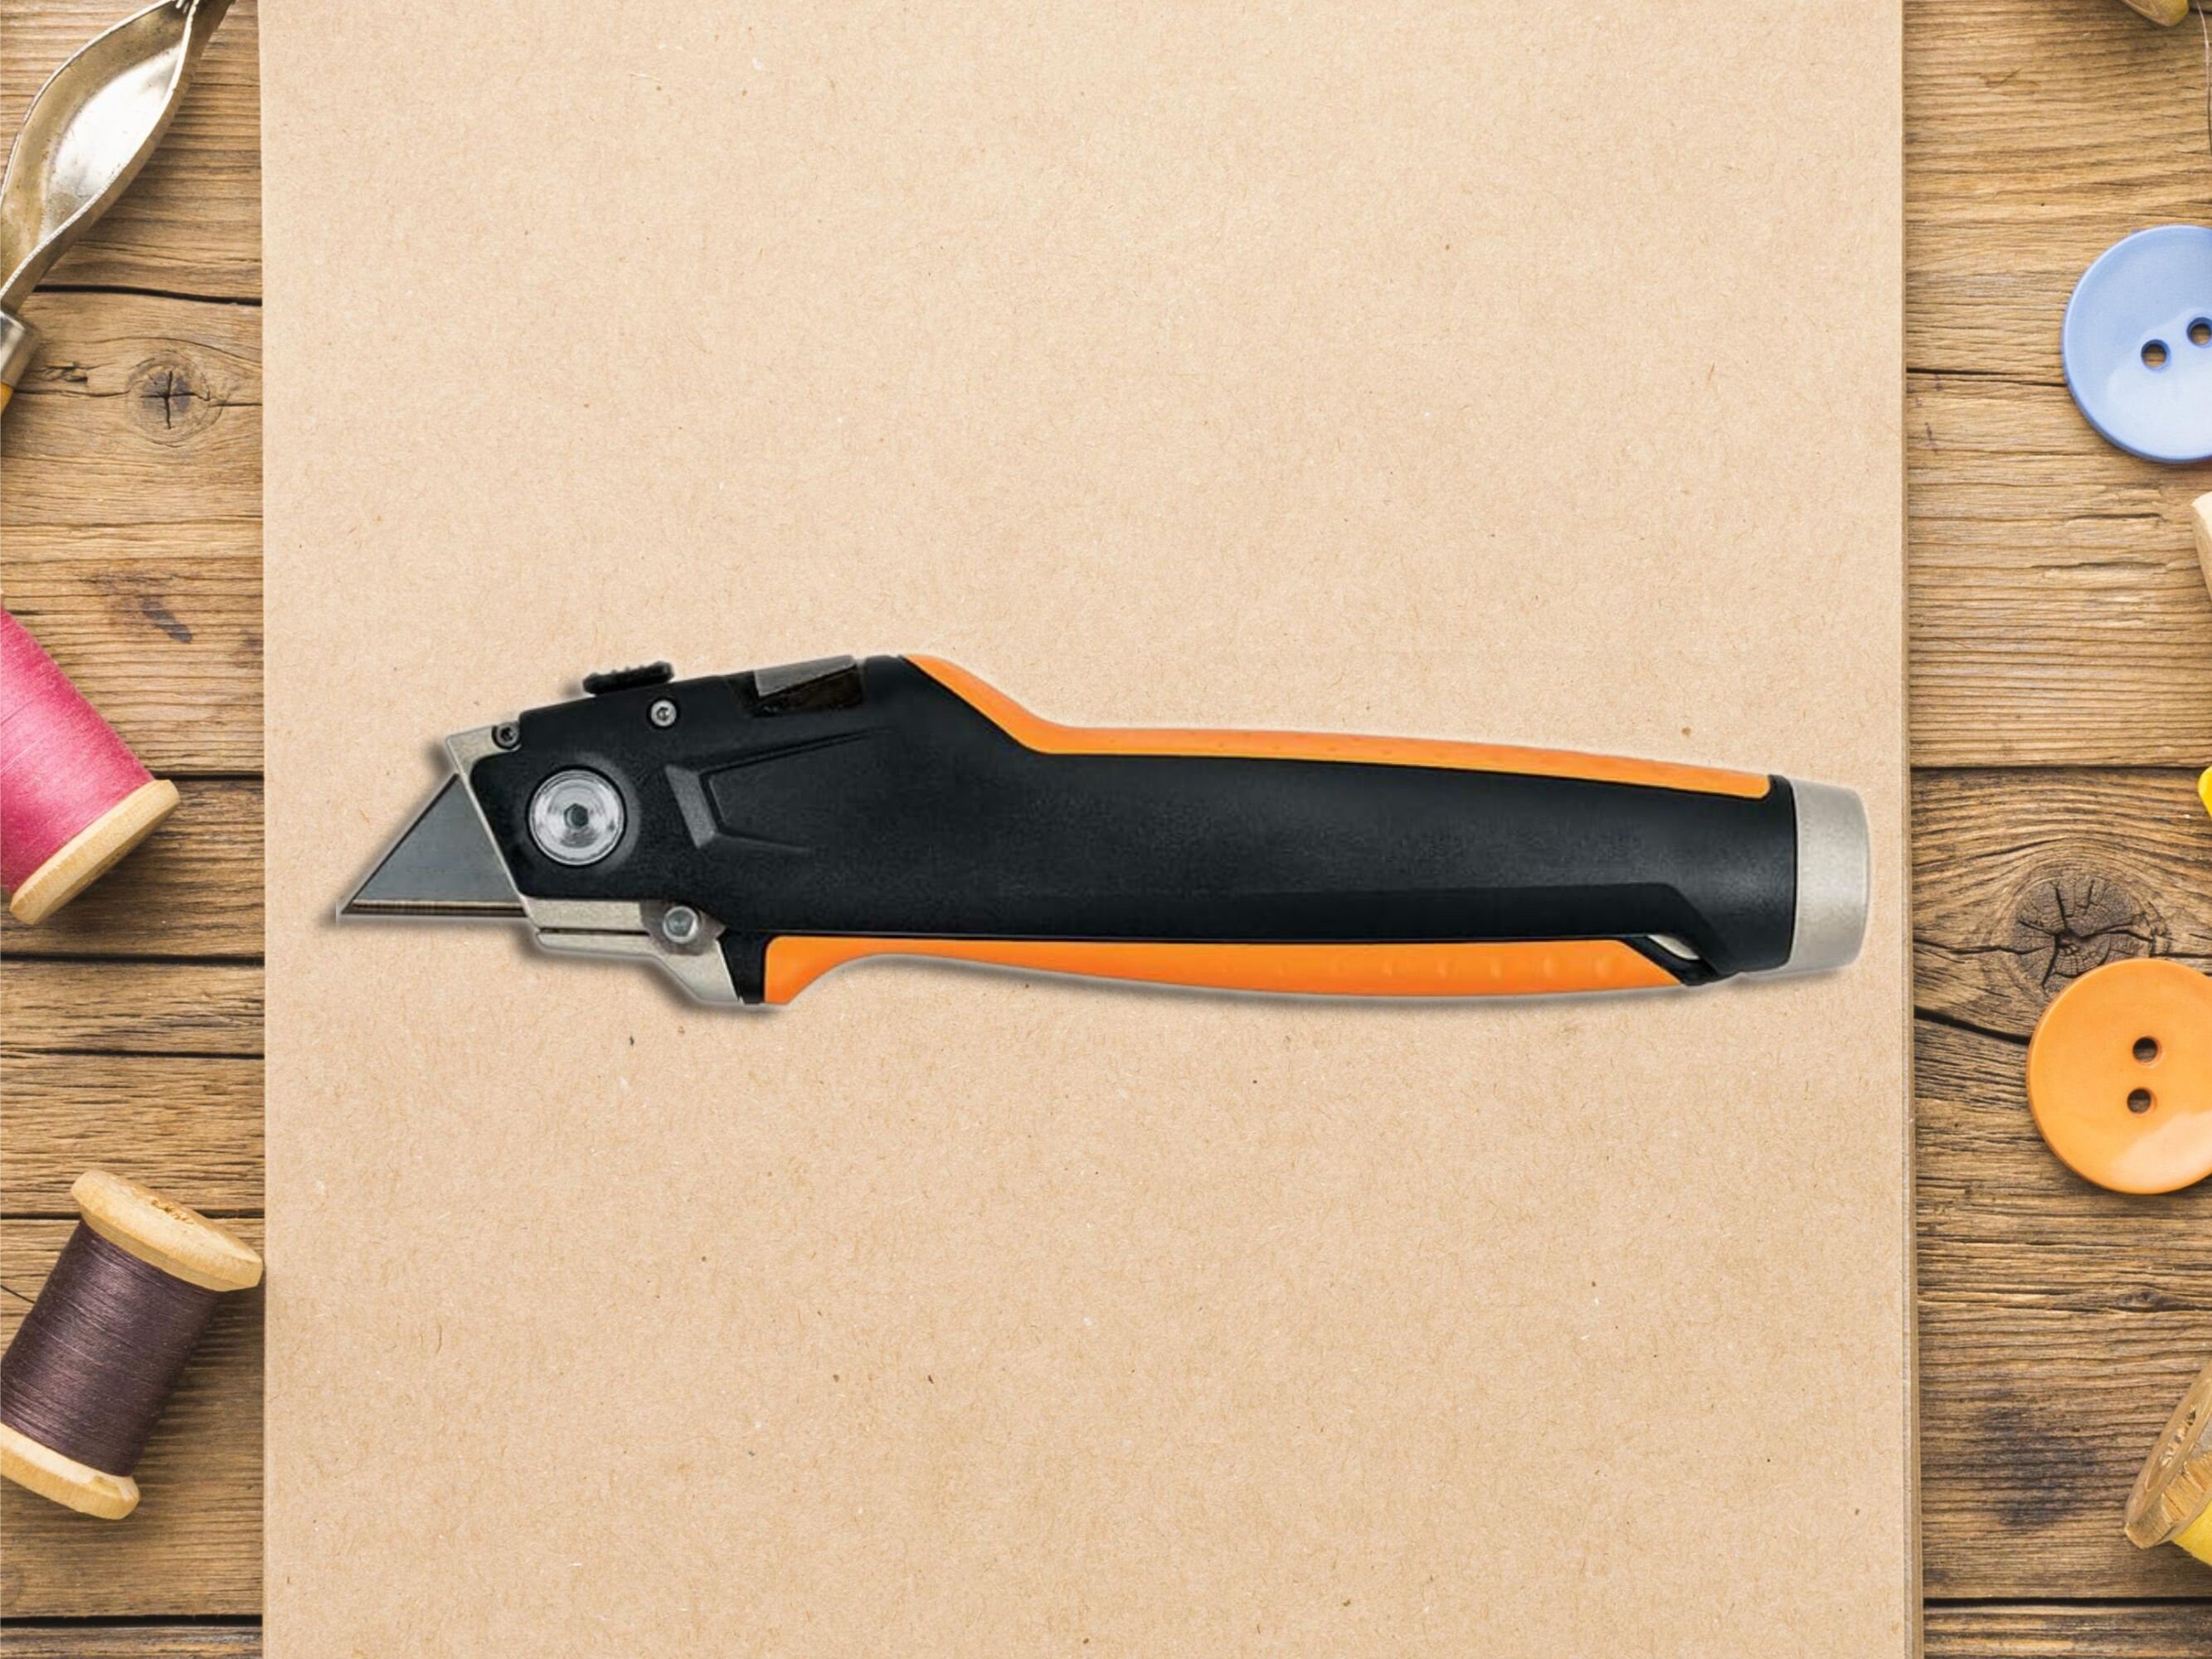 Mini Pocket Art Utility Knife Express Box Paper Cutter Craft Blade